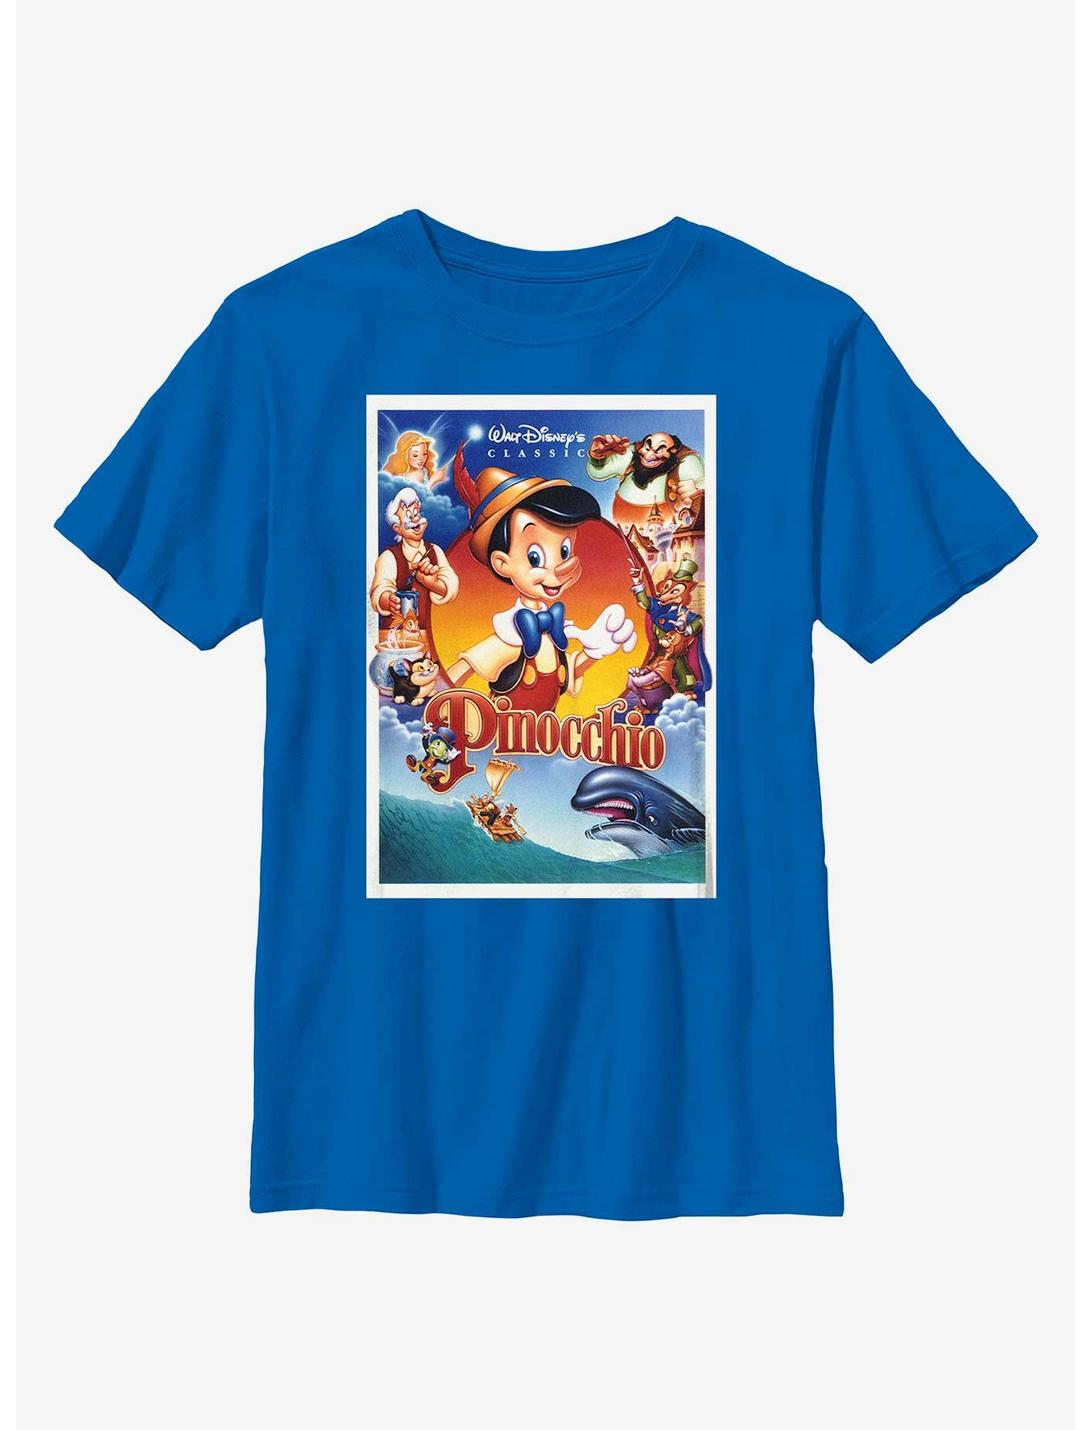 Disney Pinocchio Classic Movie Poster Youth T-Shirt, ROYAL, hi-res